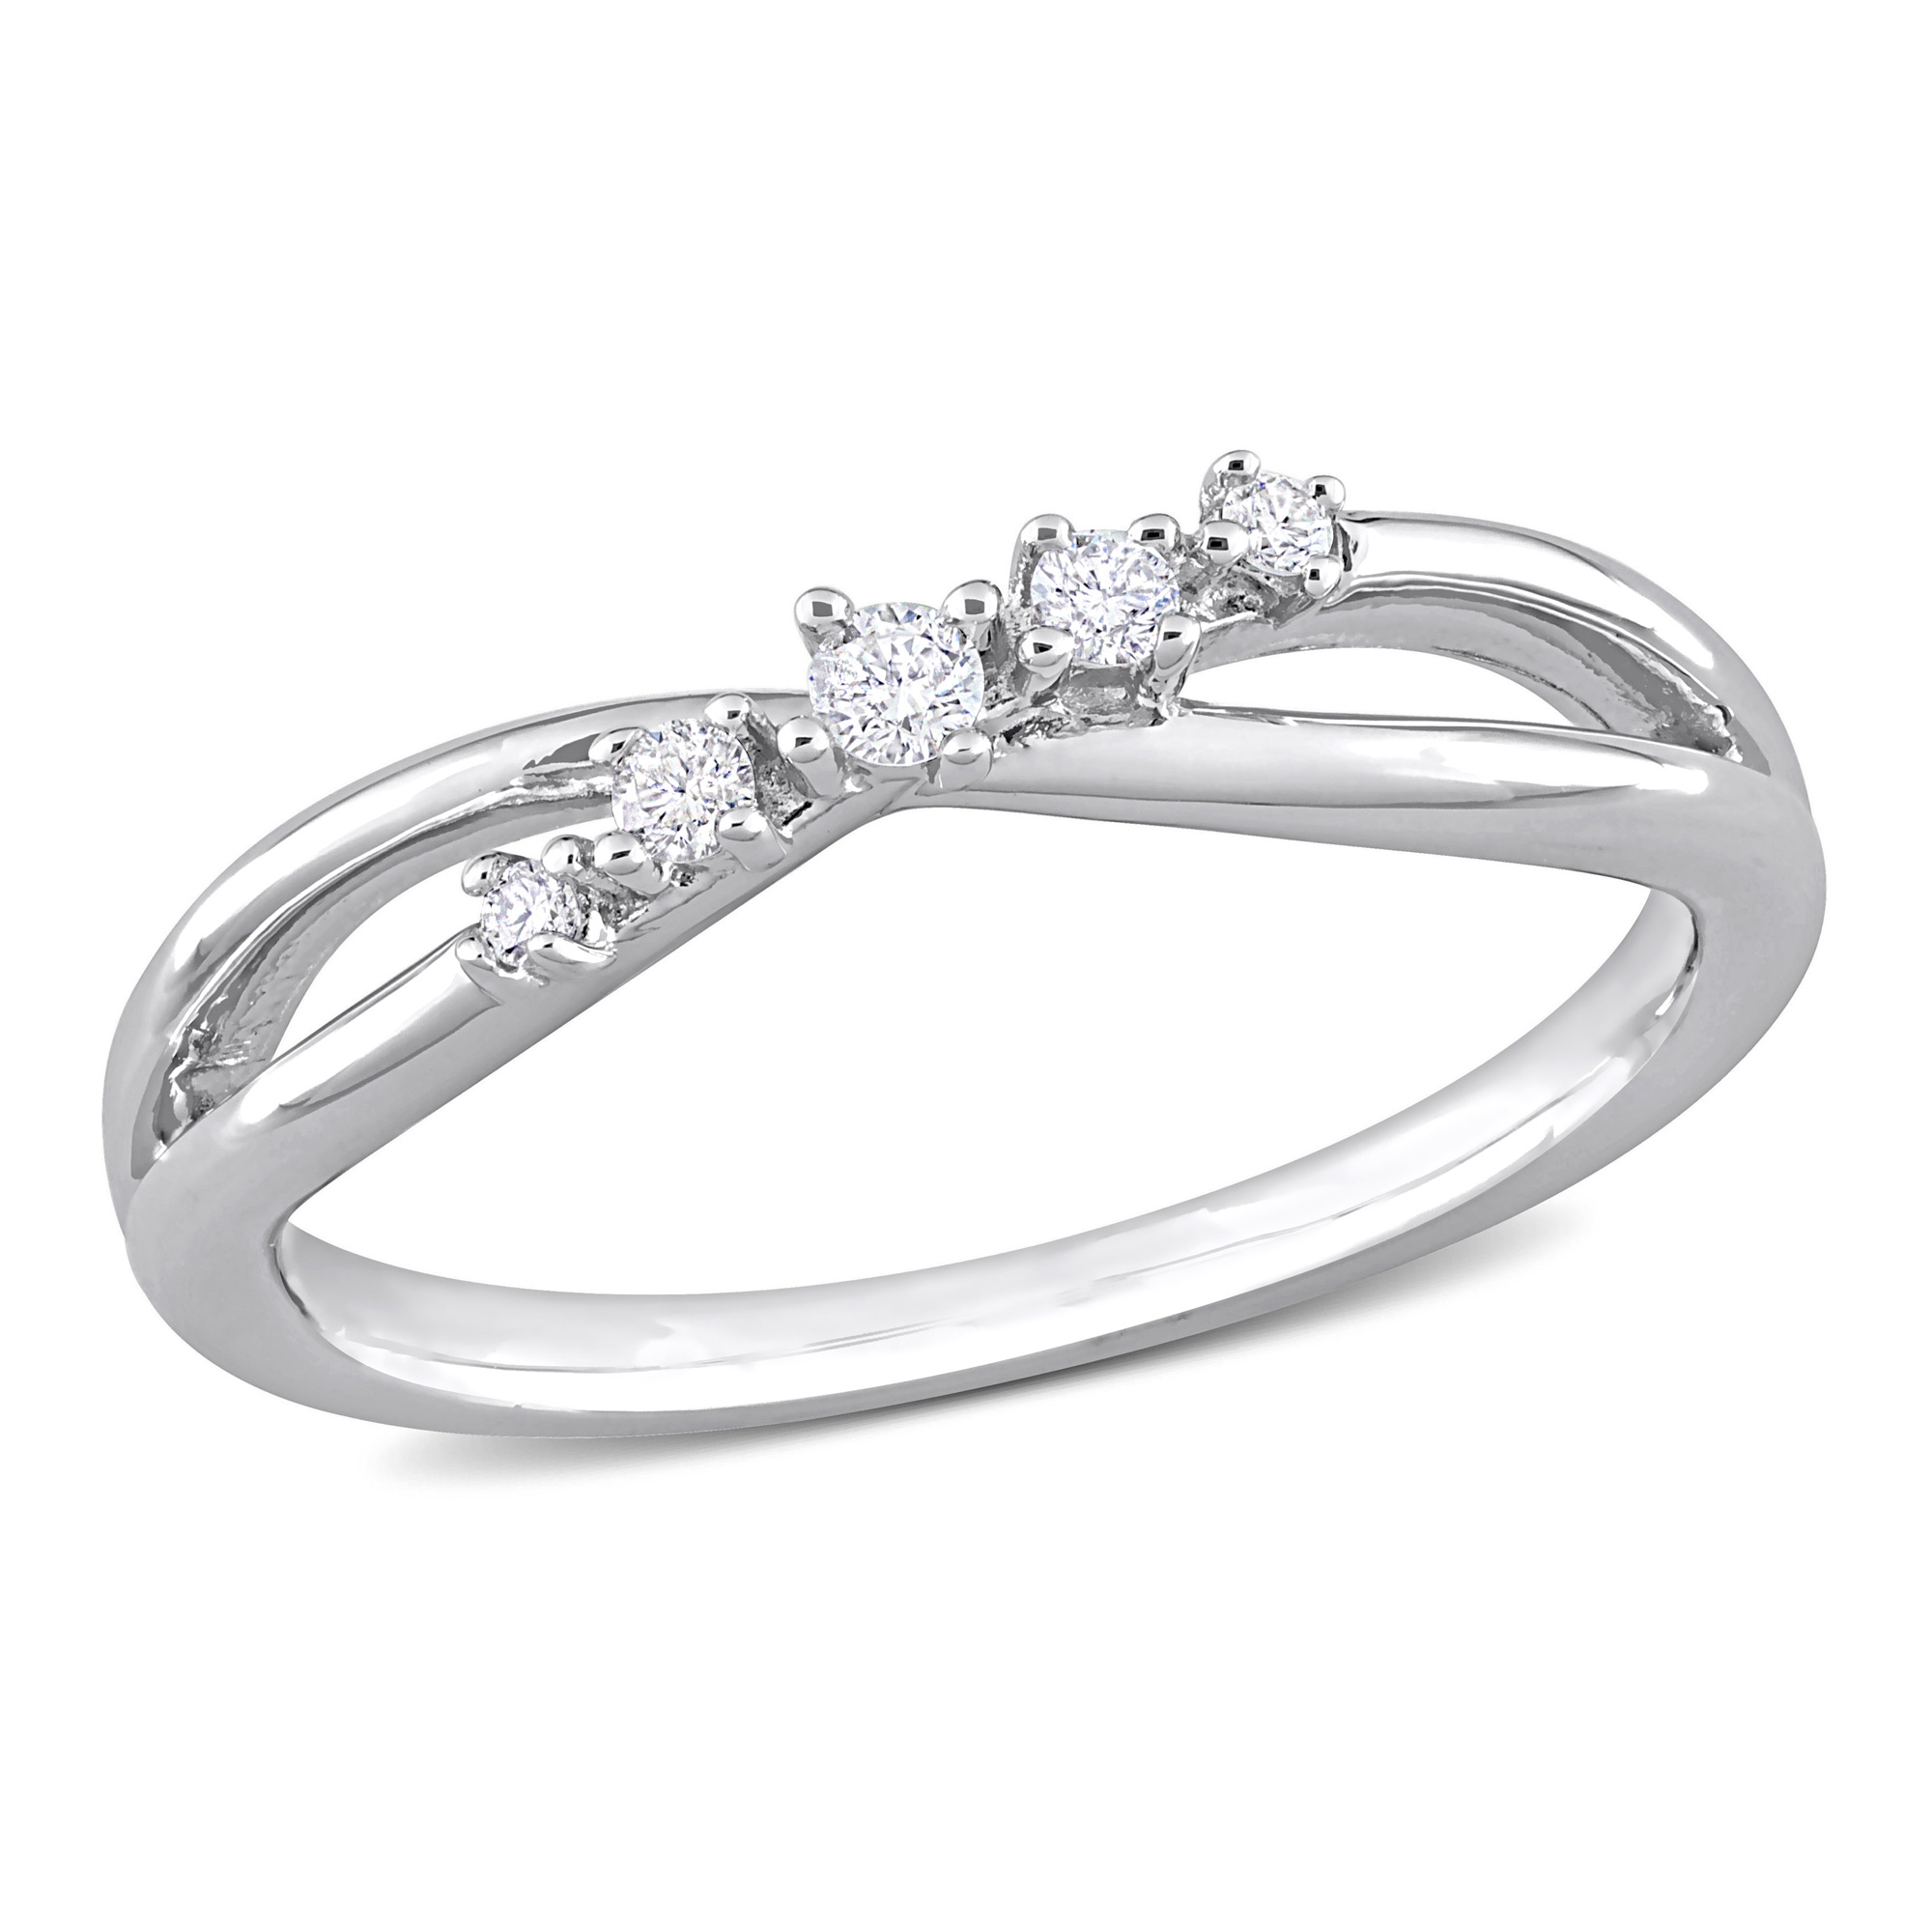 1/10ctw Diamond Diagonal Row Sterling Silver Fashion Ring - Size 7.5